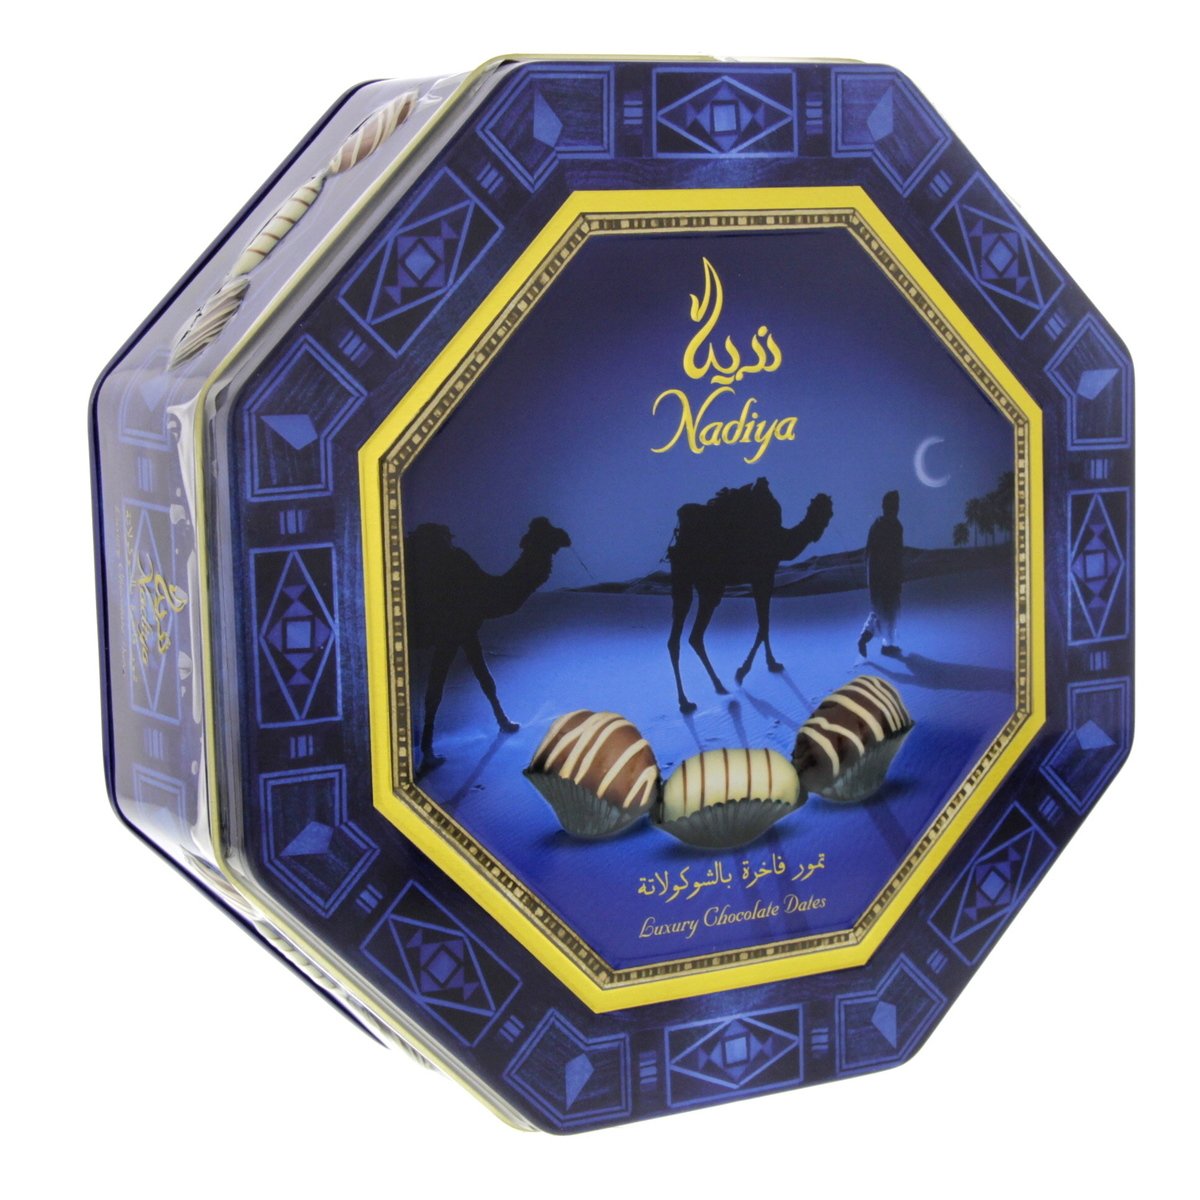 Nadiya Luxury Chocolate Dates 360 g